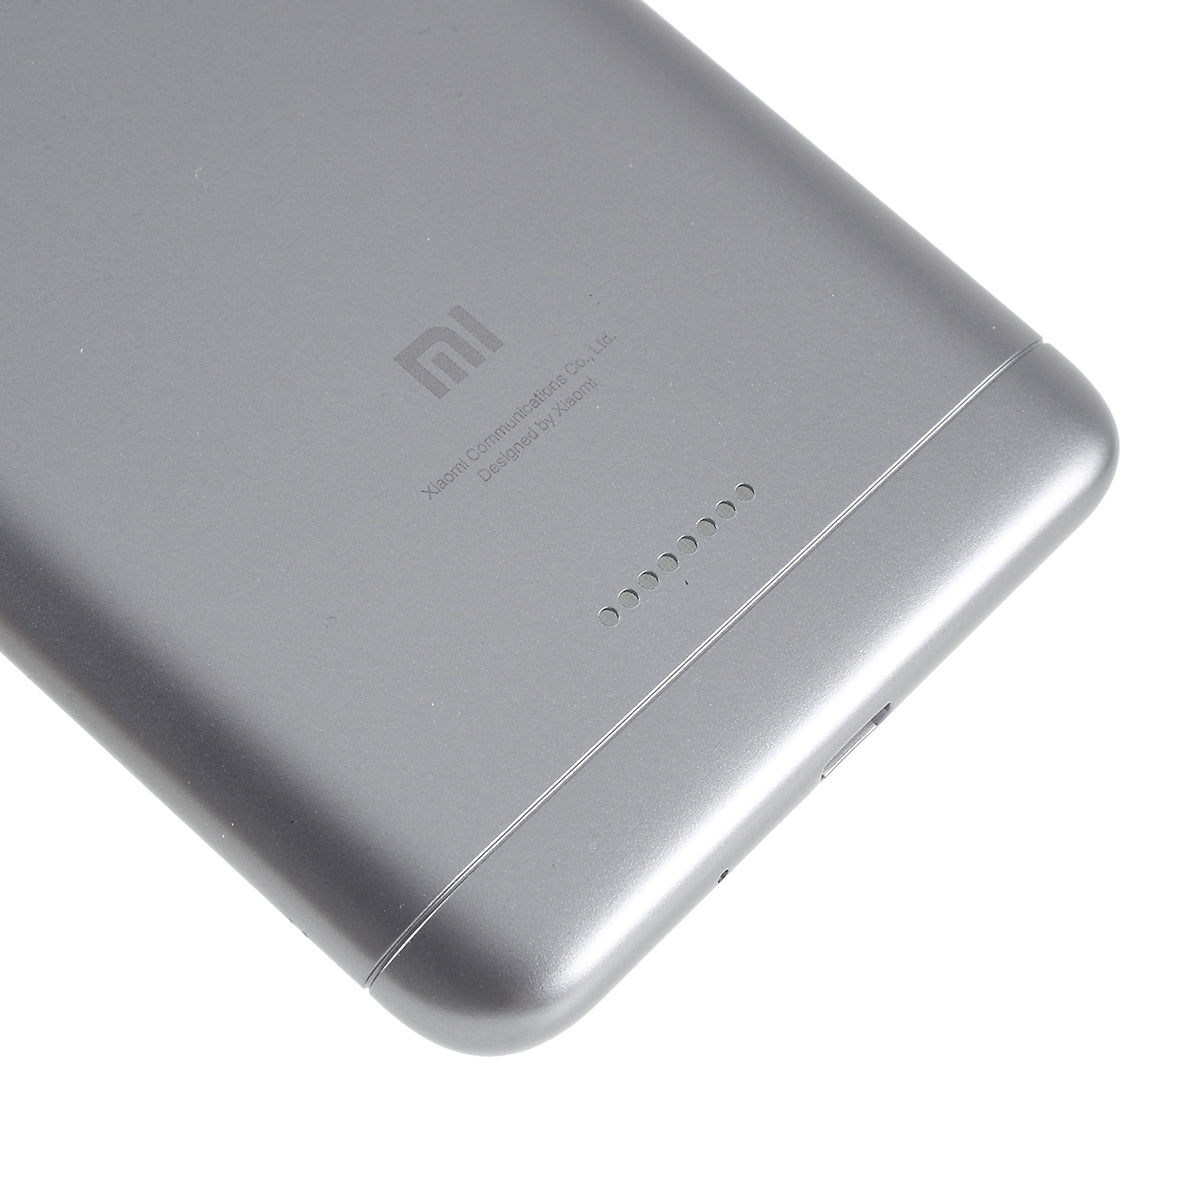 OEM Battery Housing Door Cover Part (Single Card Slot) for Xiaomi Redmi 6 - Grey